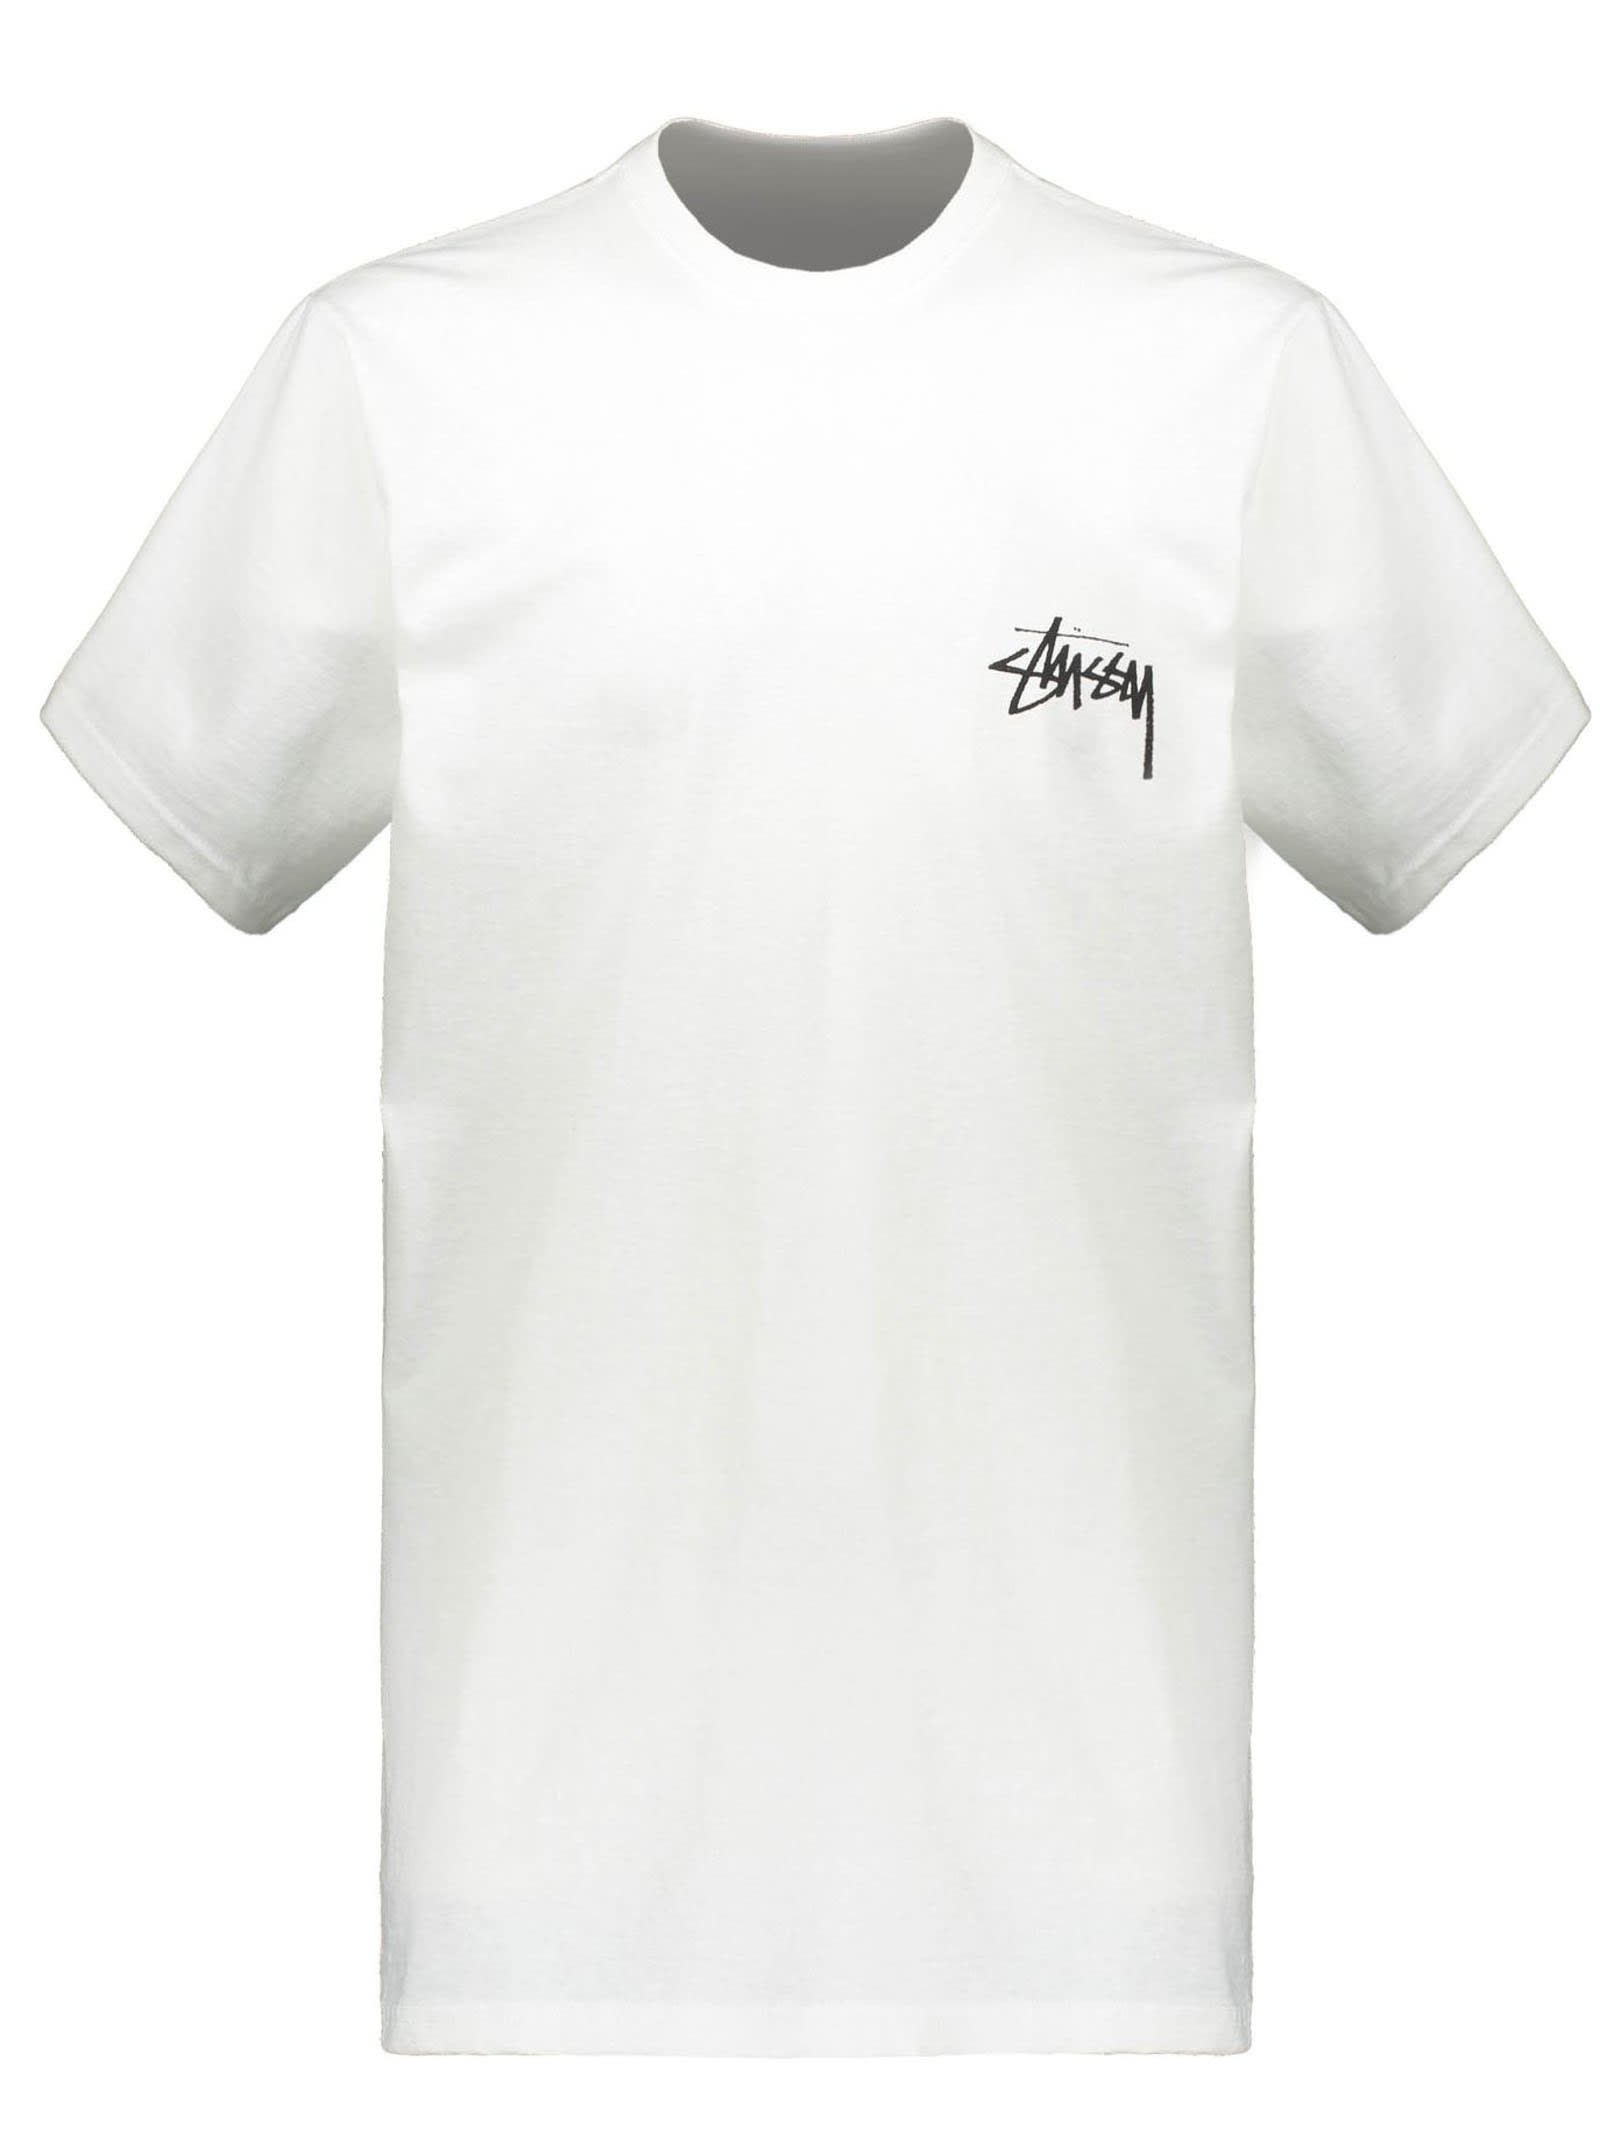 Stussy White Cotton T-shirt | Smart Closet